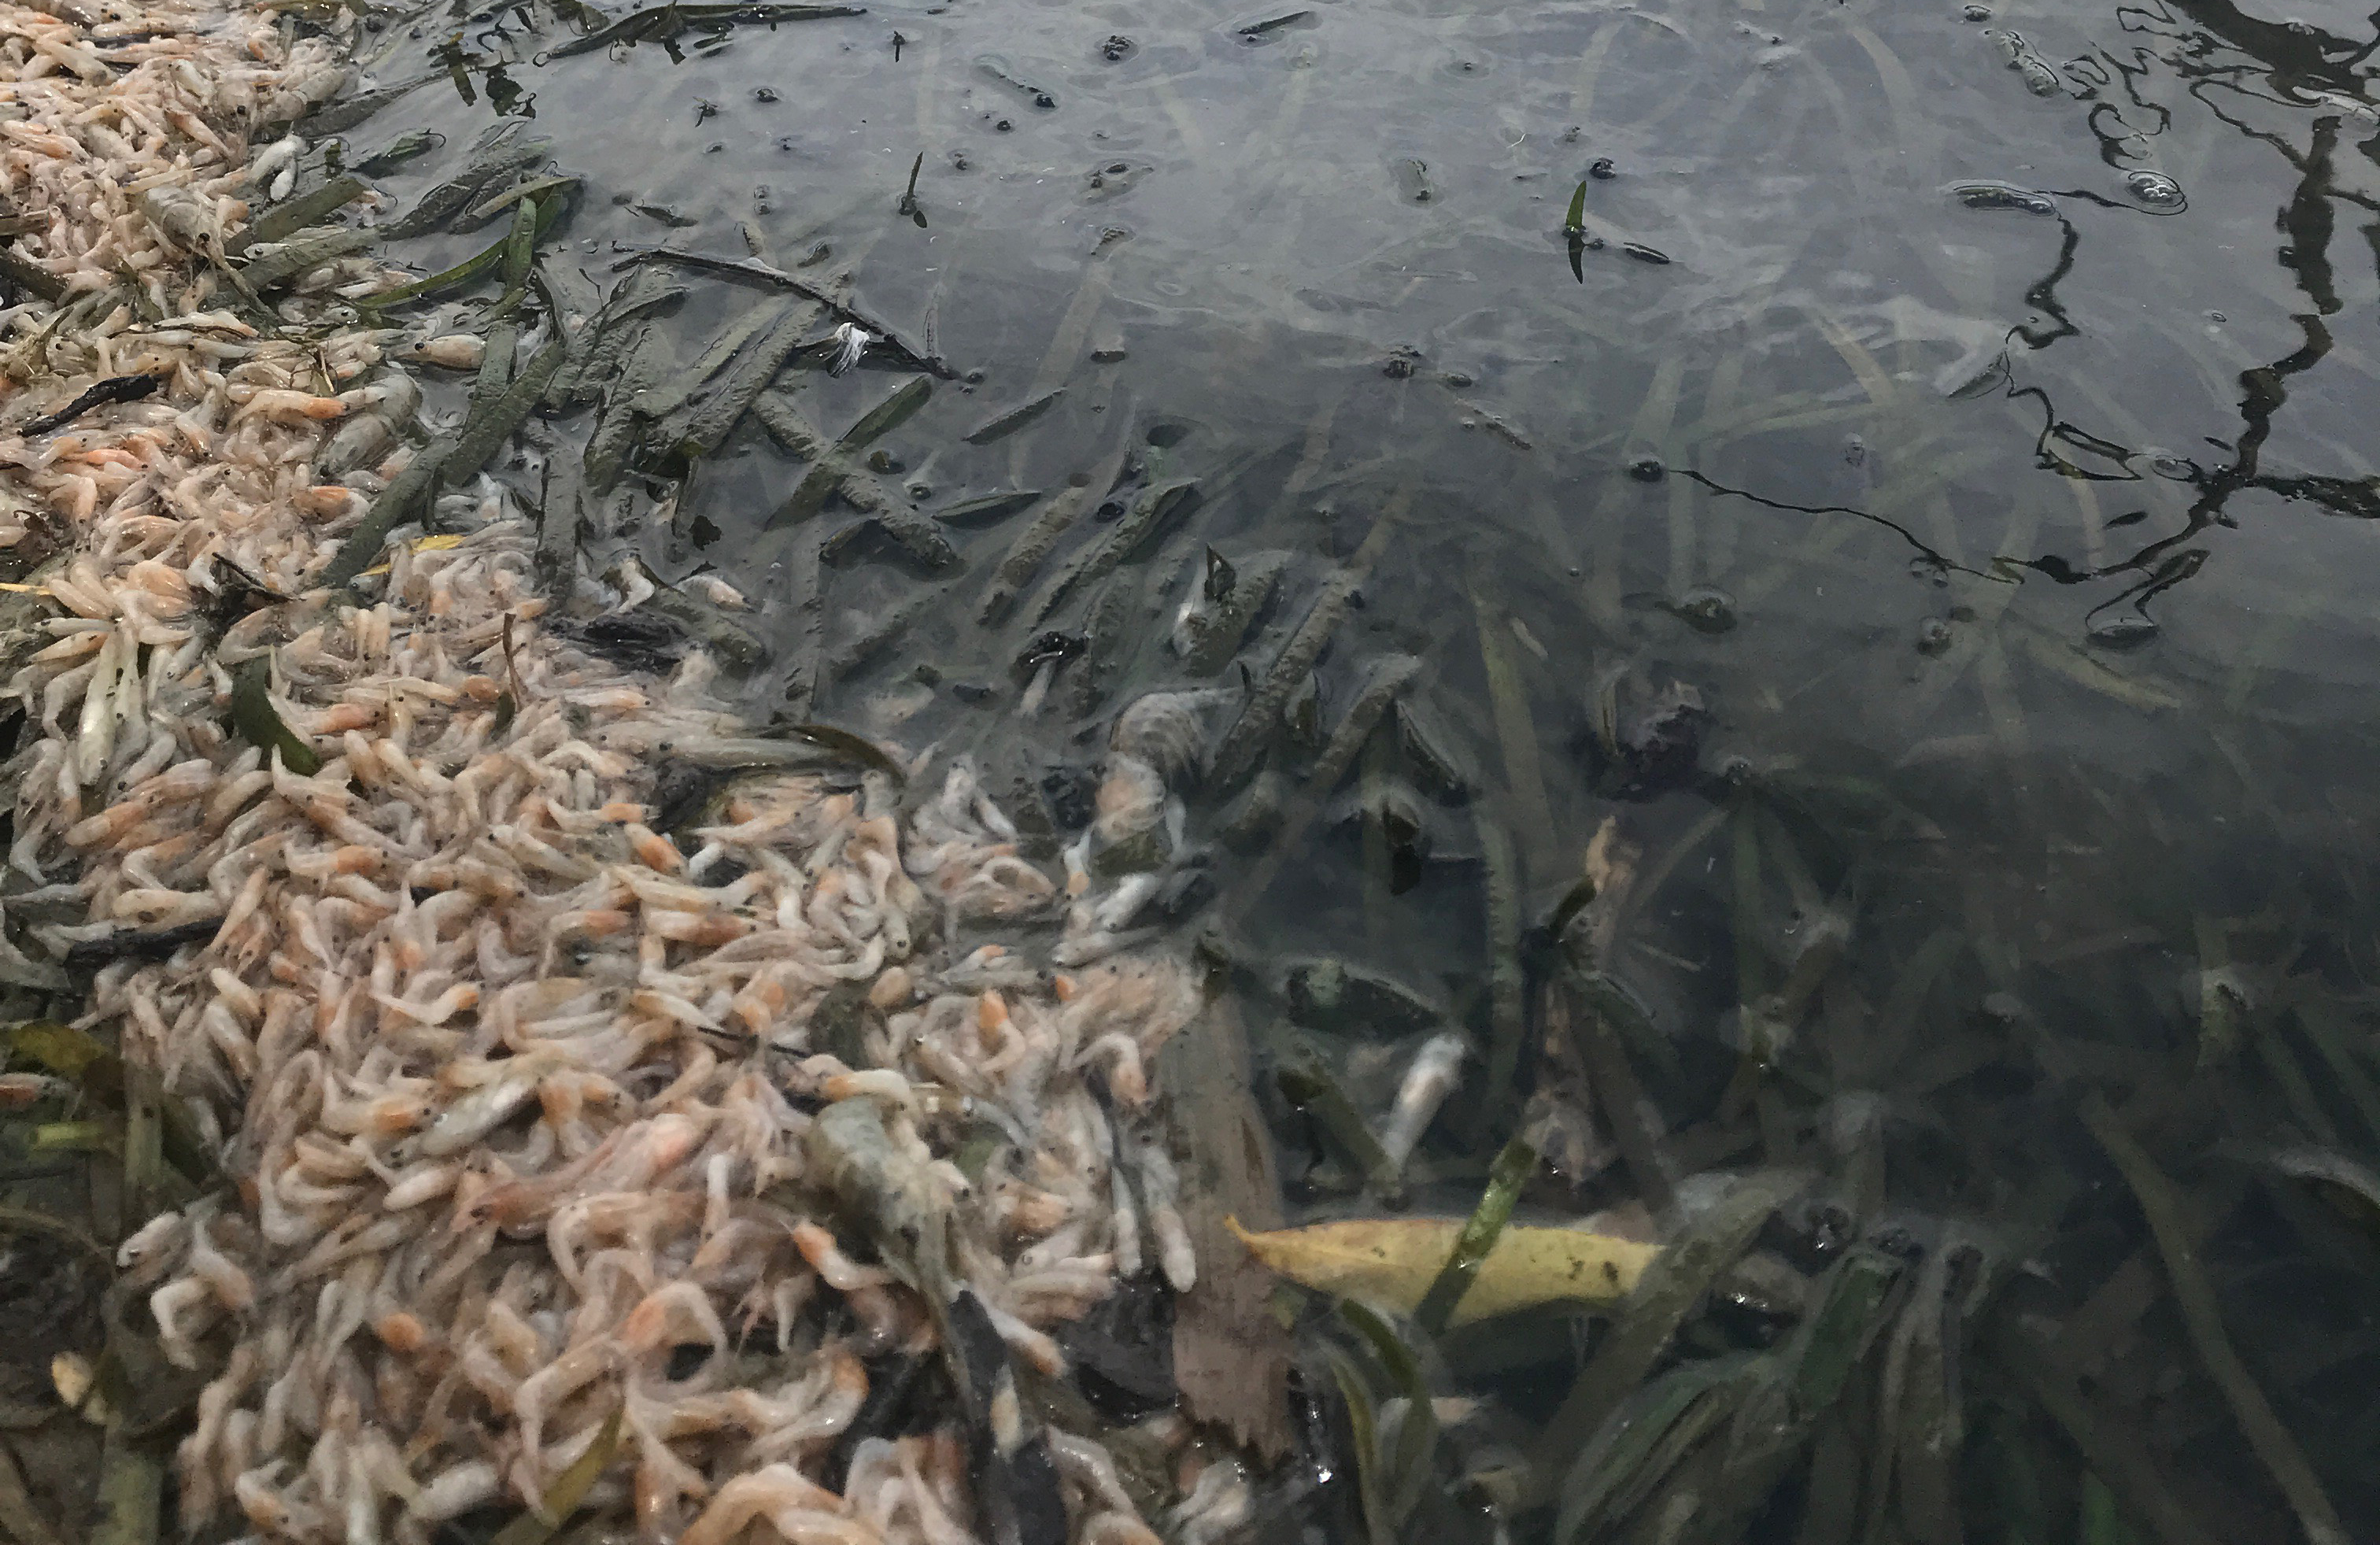 Freshwater shrimp fish kill at Lake Inverell